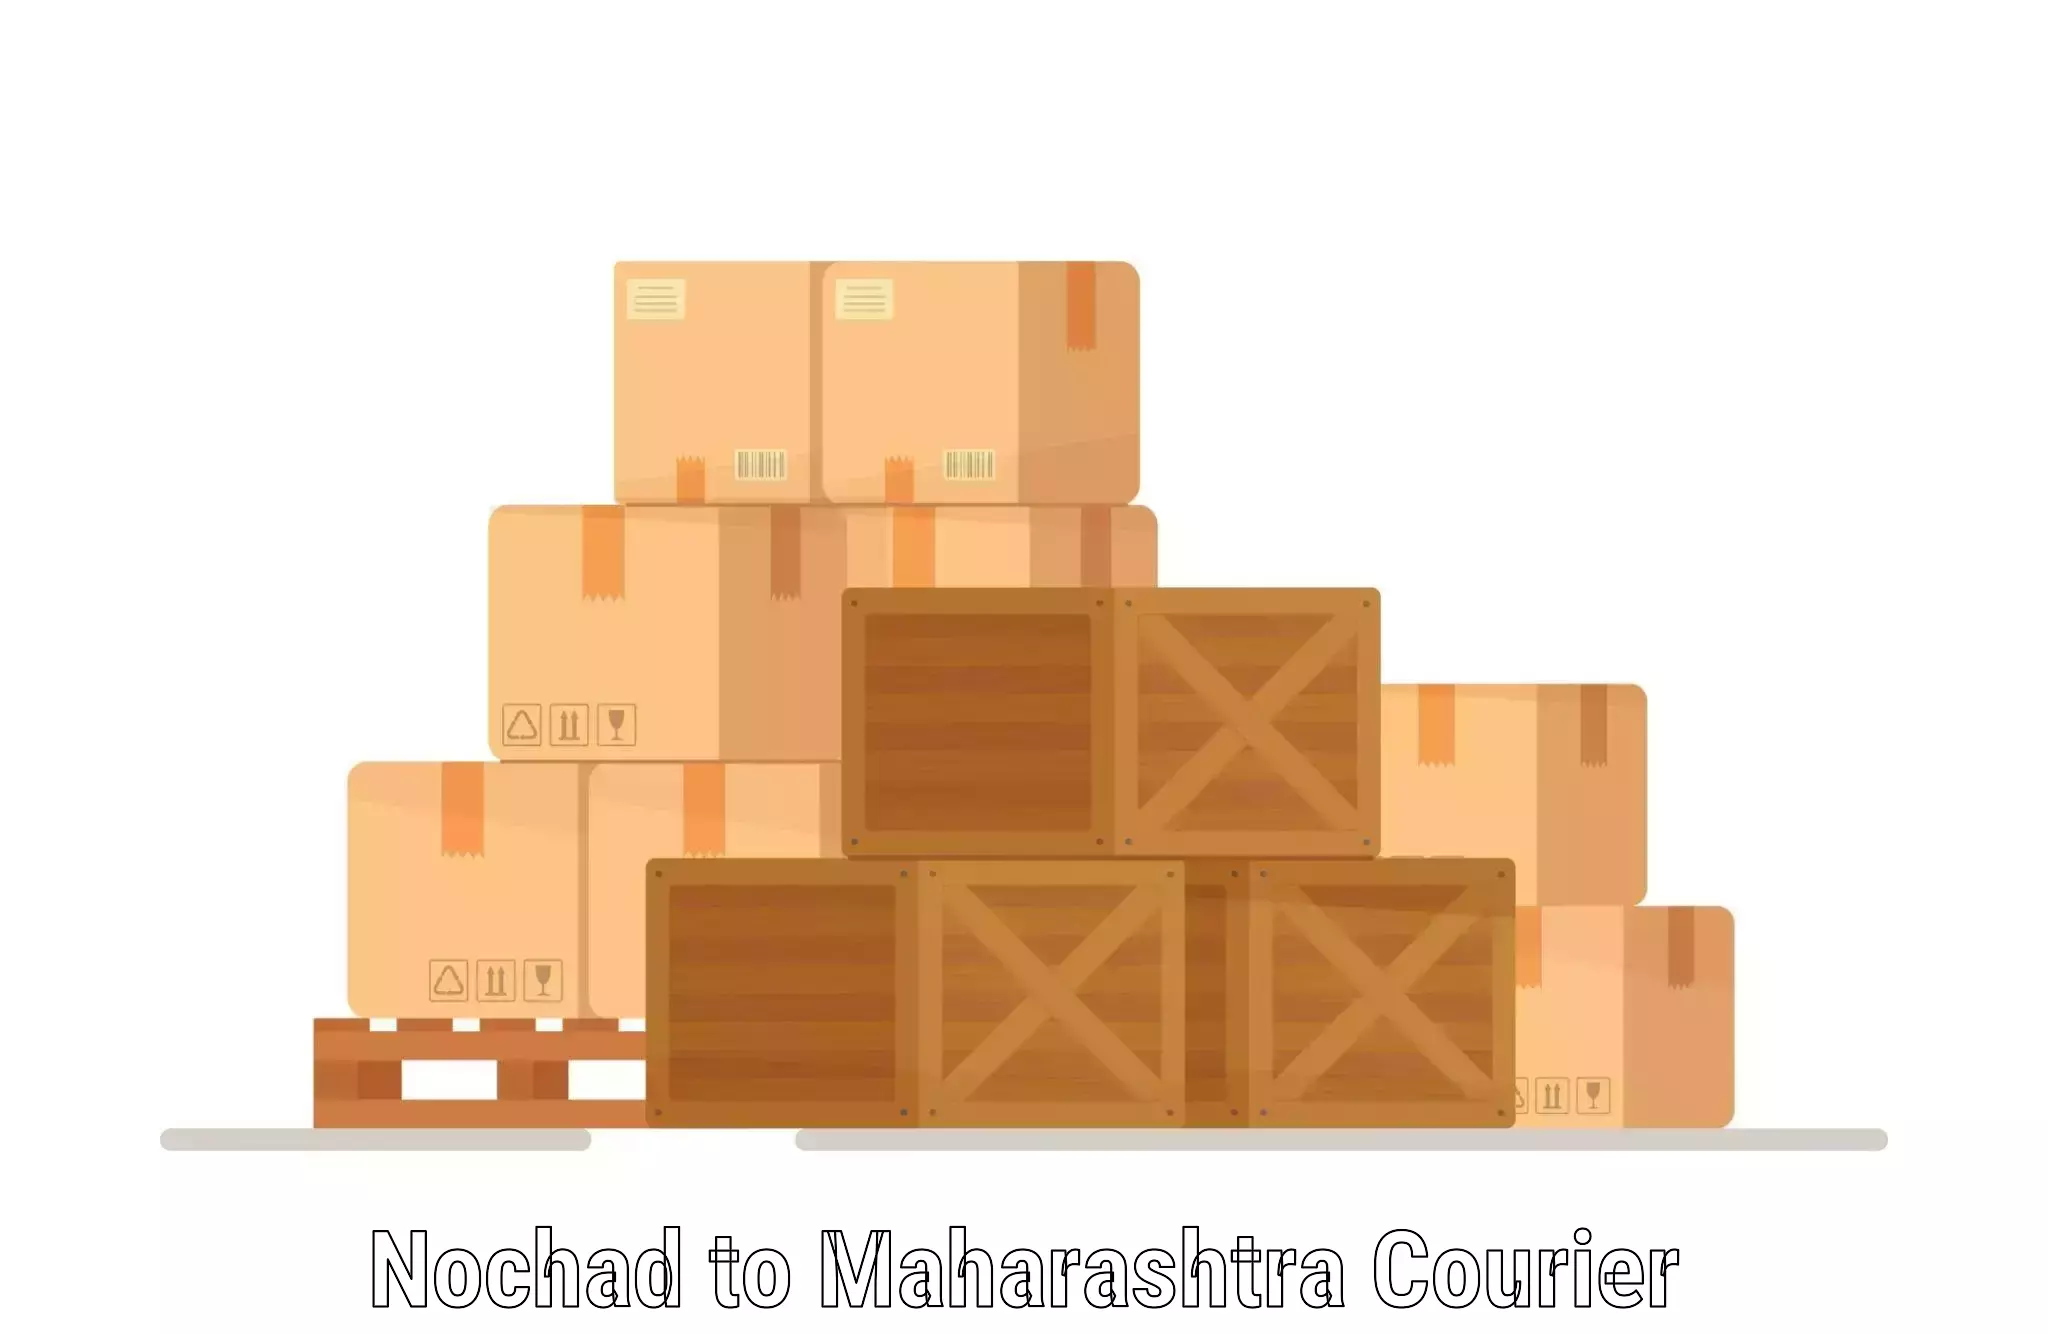 Comprehensive shipping network Nochad to Mumbai Port